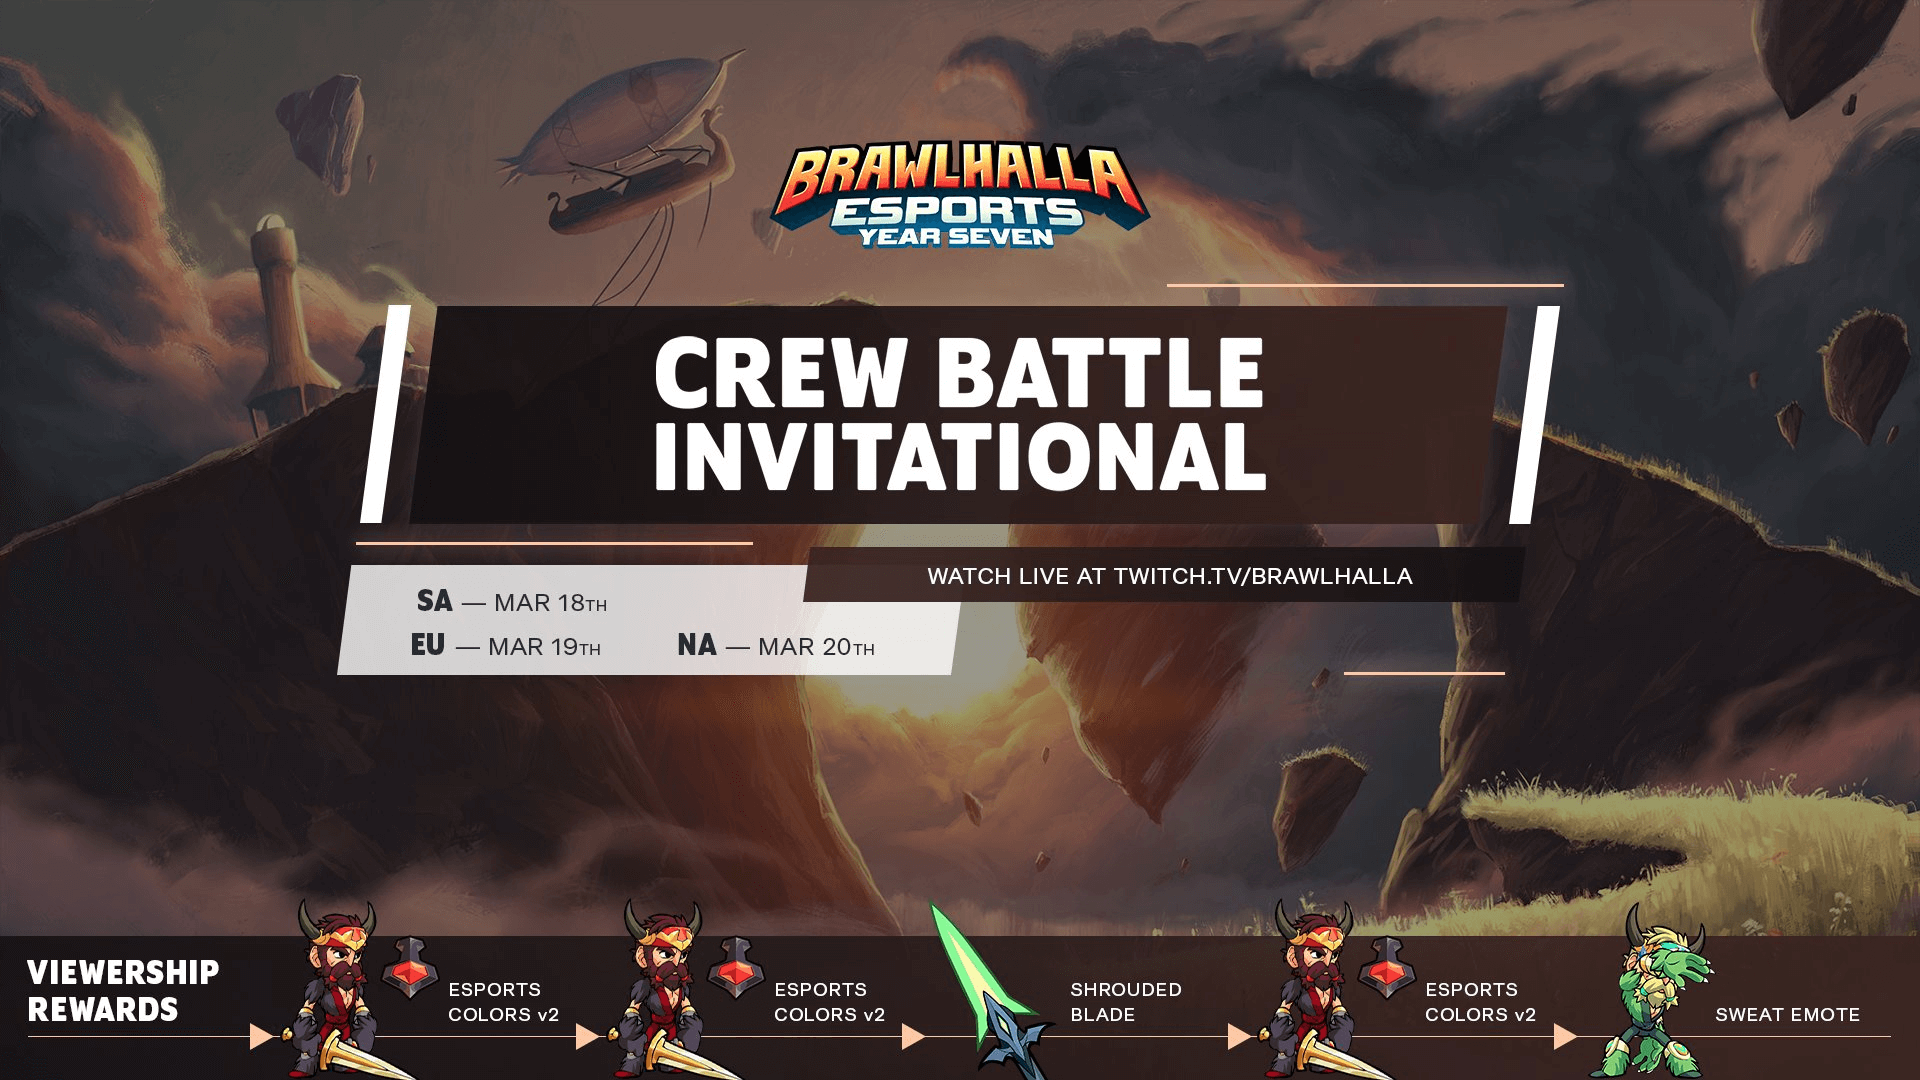 Crew Battle Invitational — First Brawlhalla Team Tournament